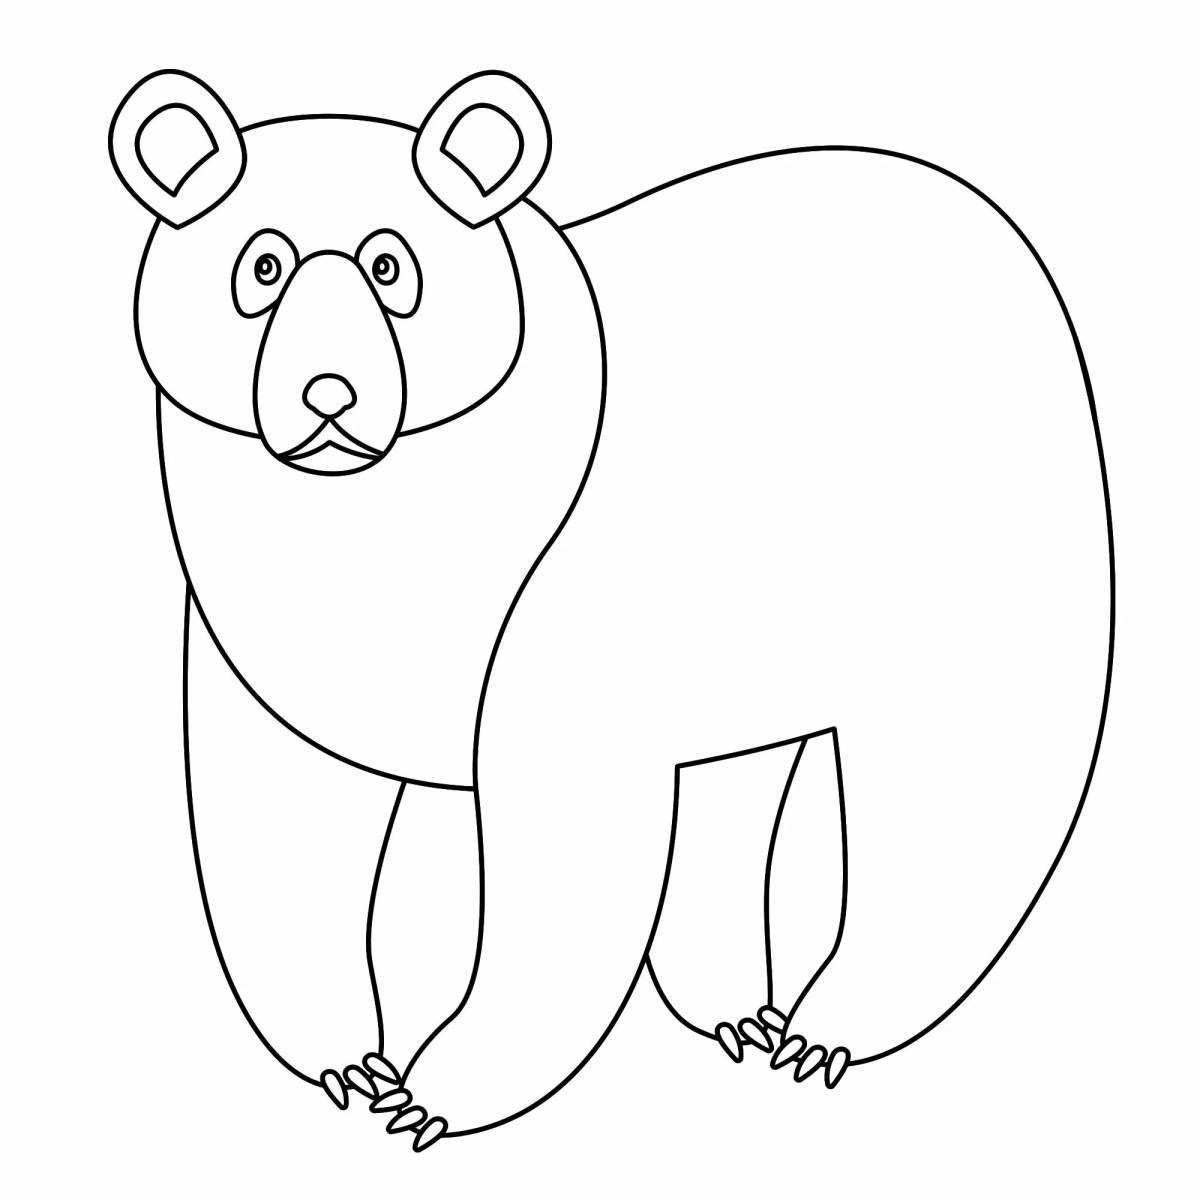 Huggable coloring page медведь неуклюжий